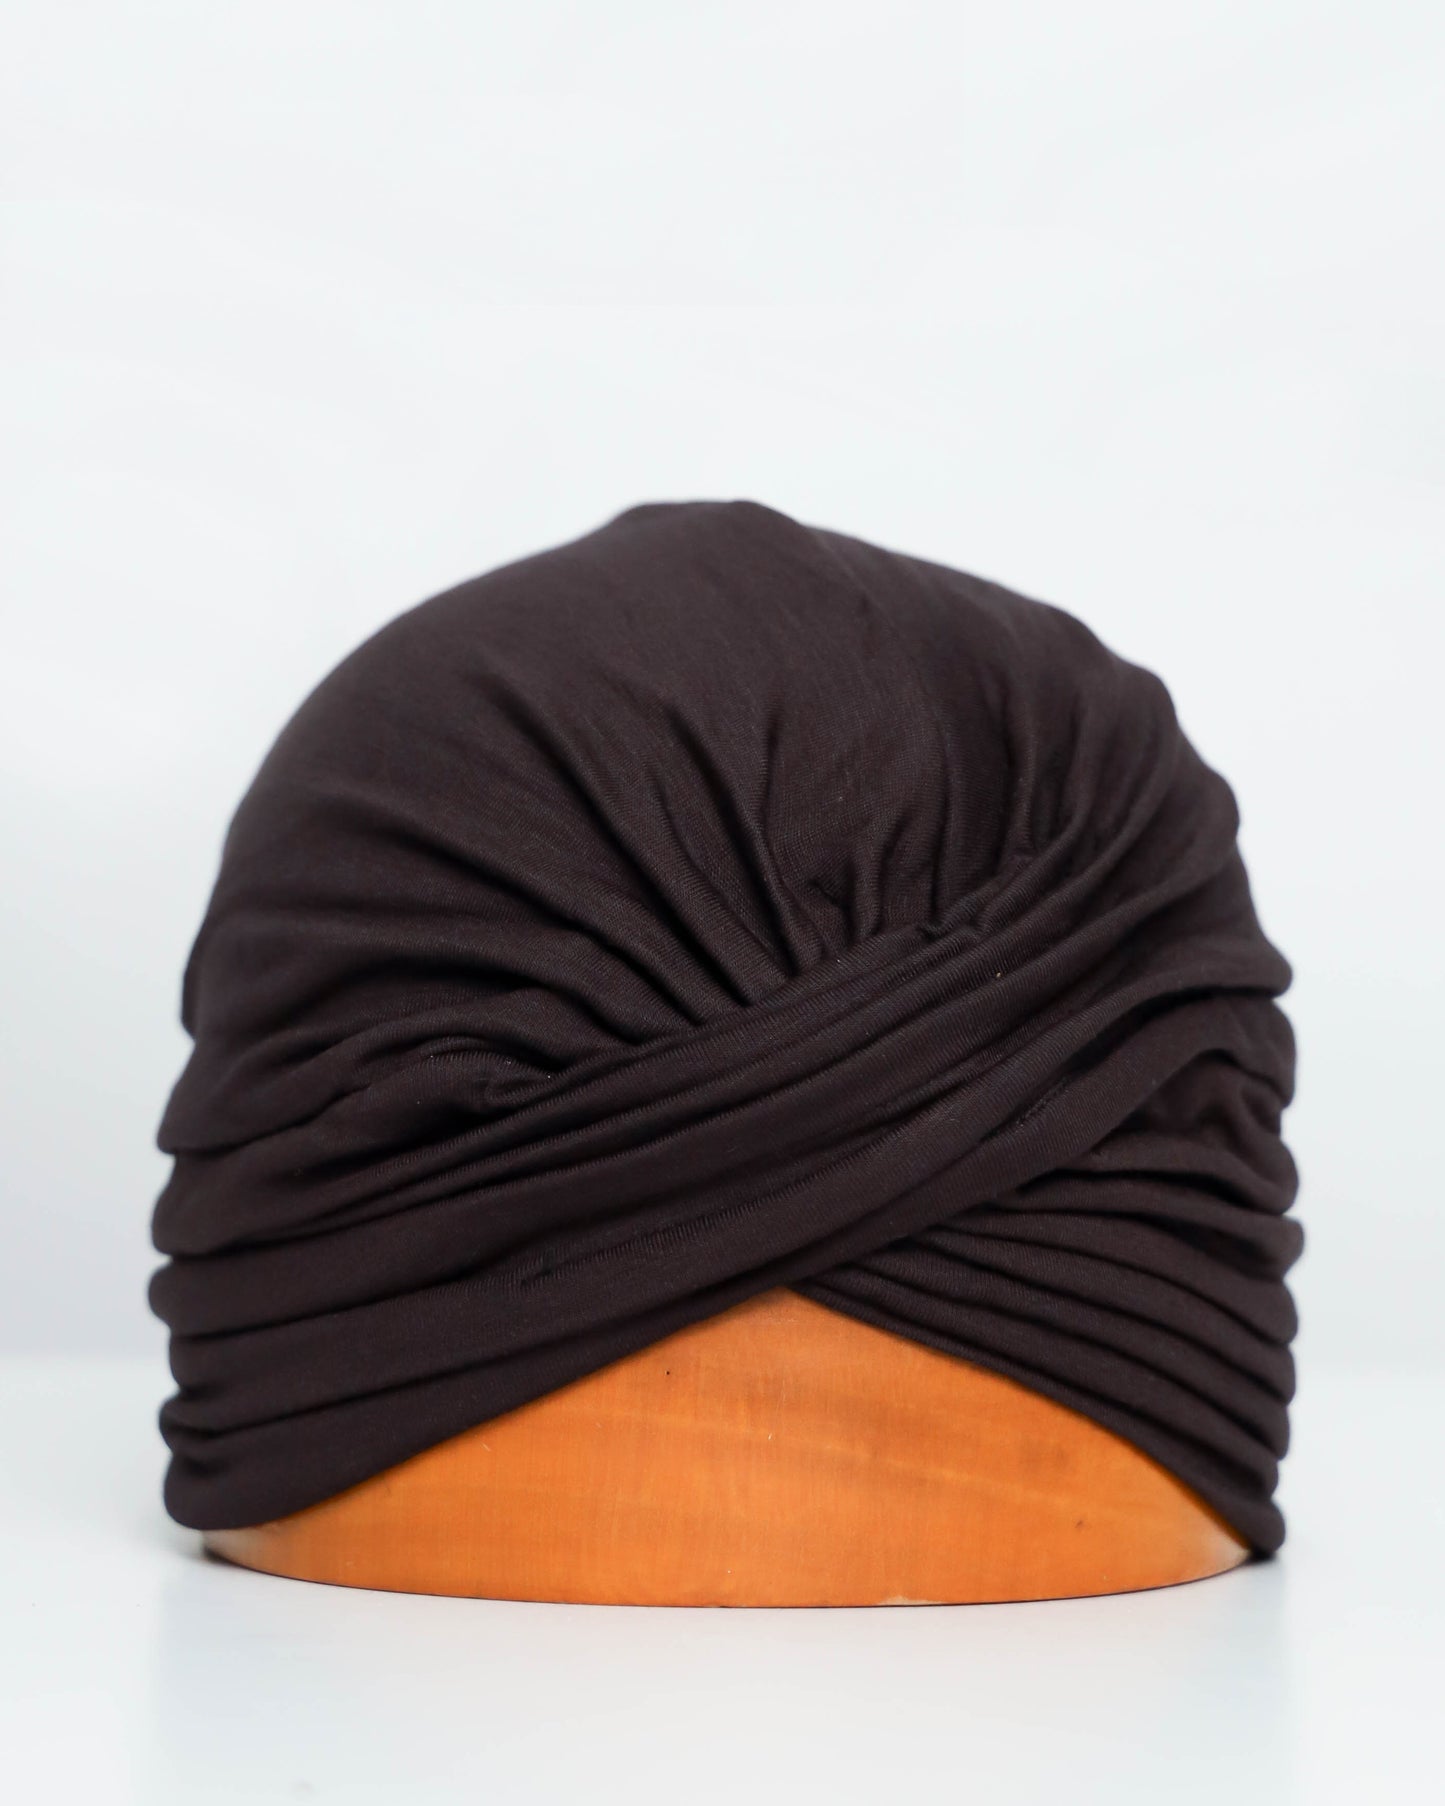 Twisted Pure Cotton Turban